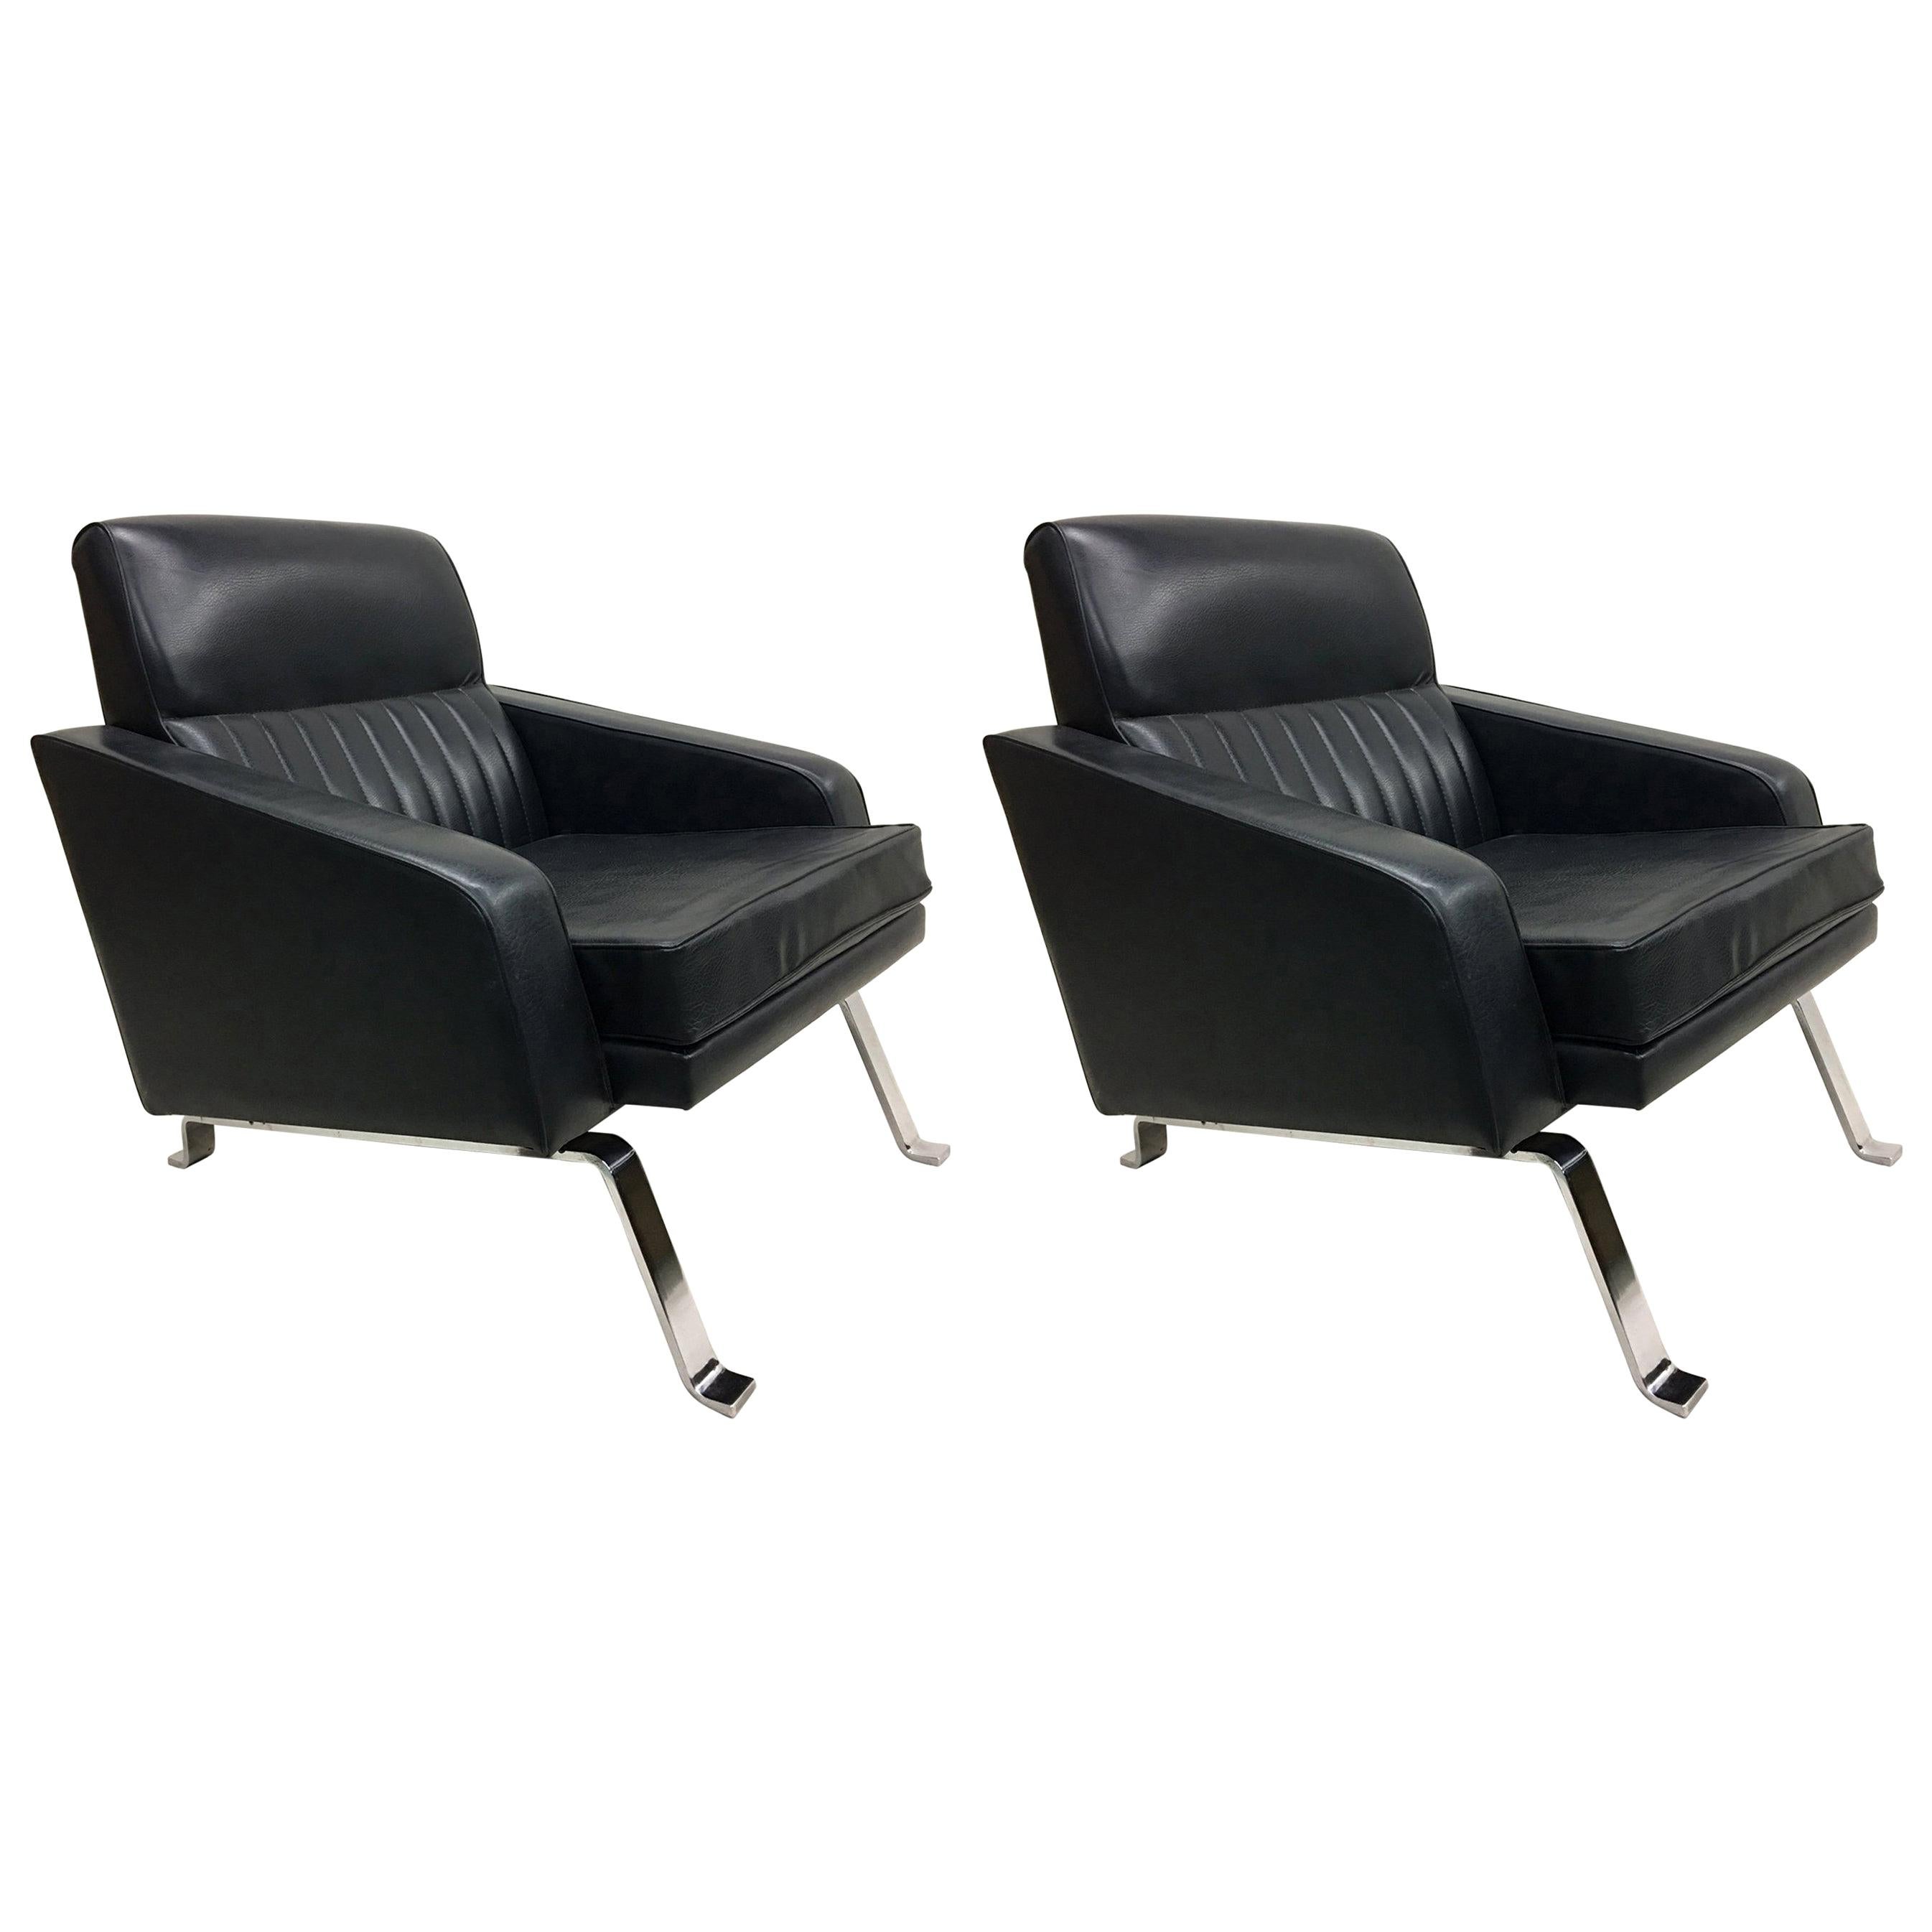 Pair of Italian Midcentury Lounge Chairs, Ignazio Gardella, Diagramma Style